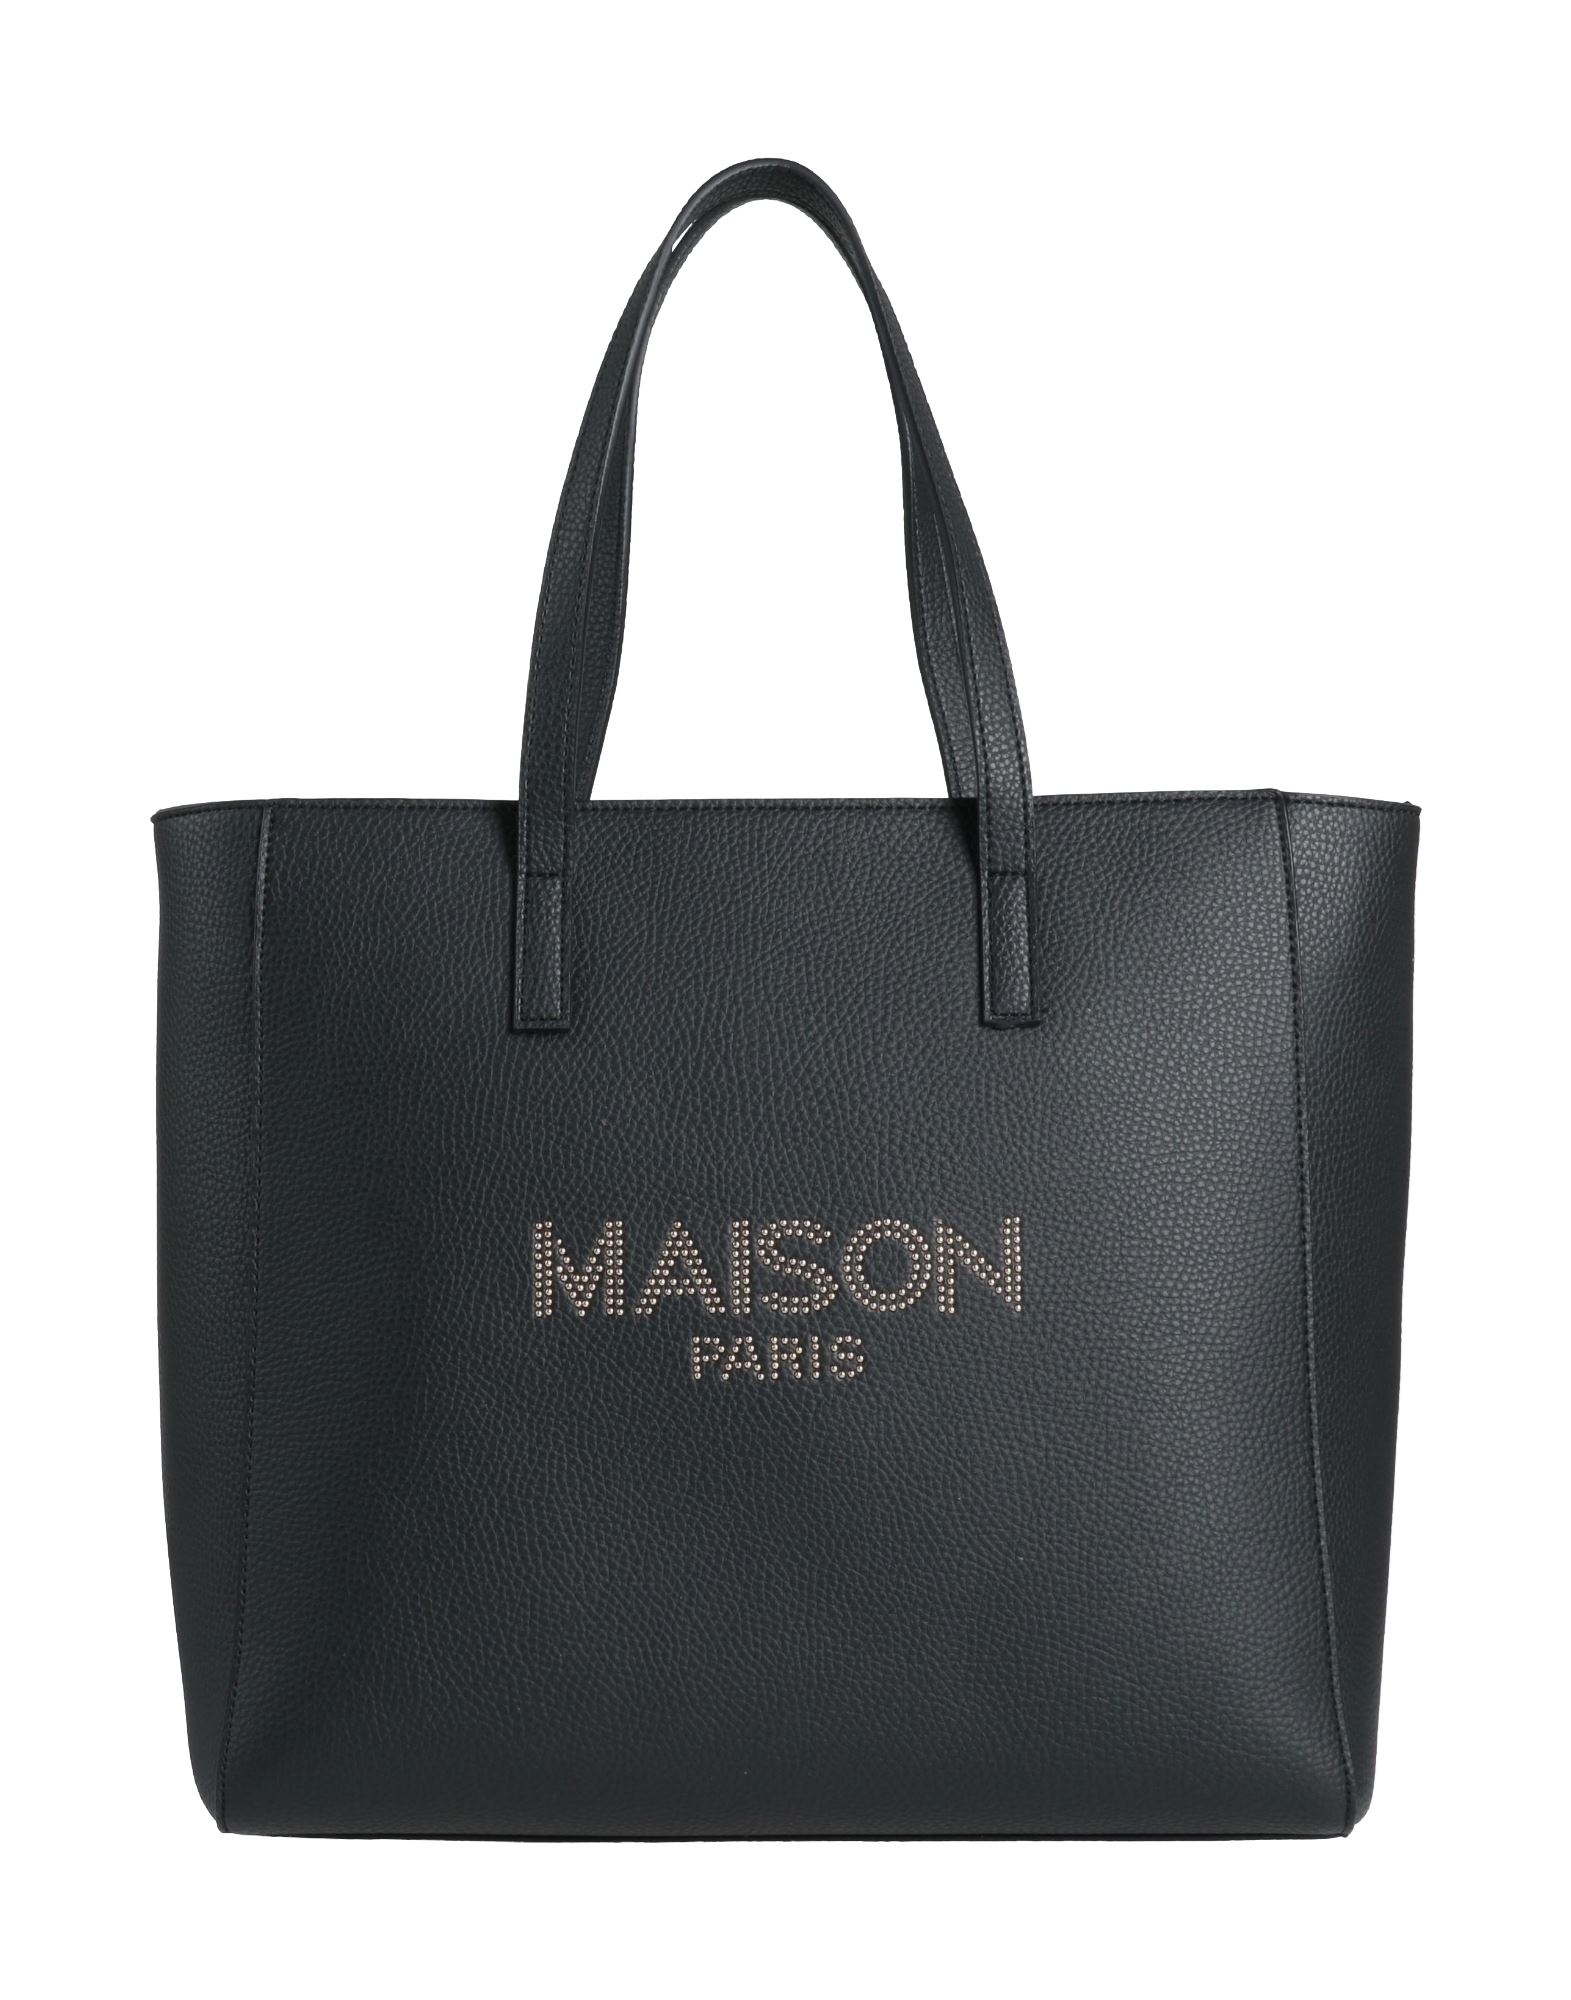 MAISON 9 Paris Handbags